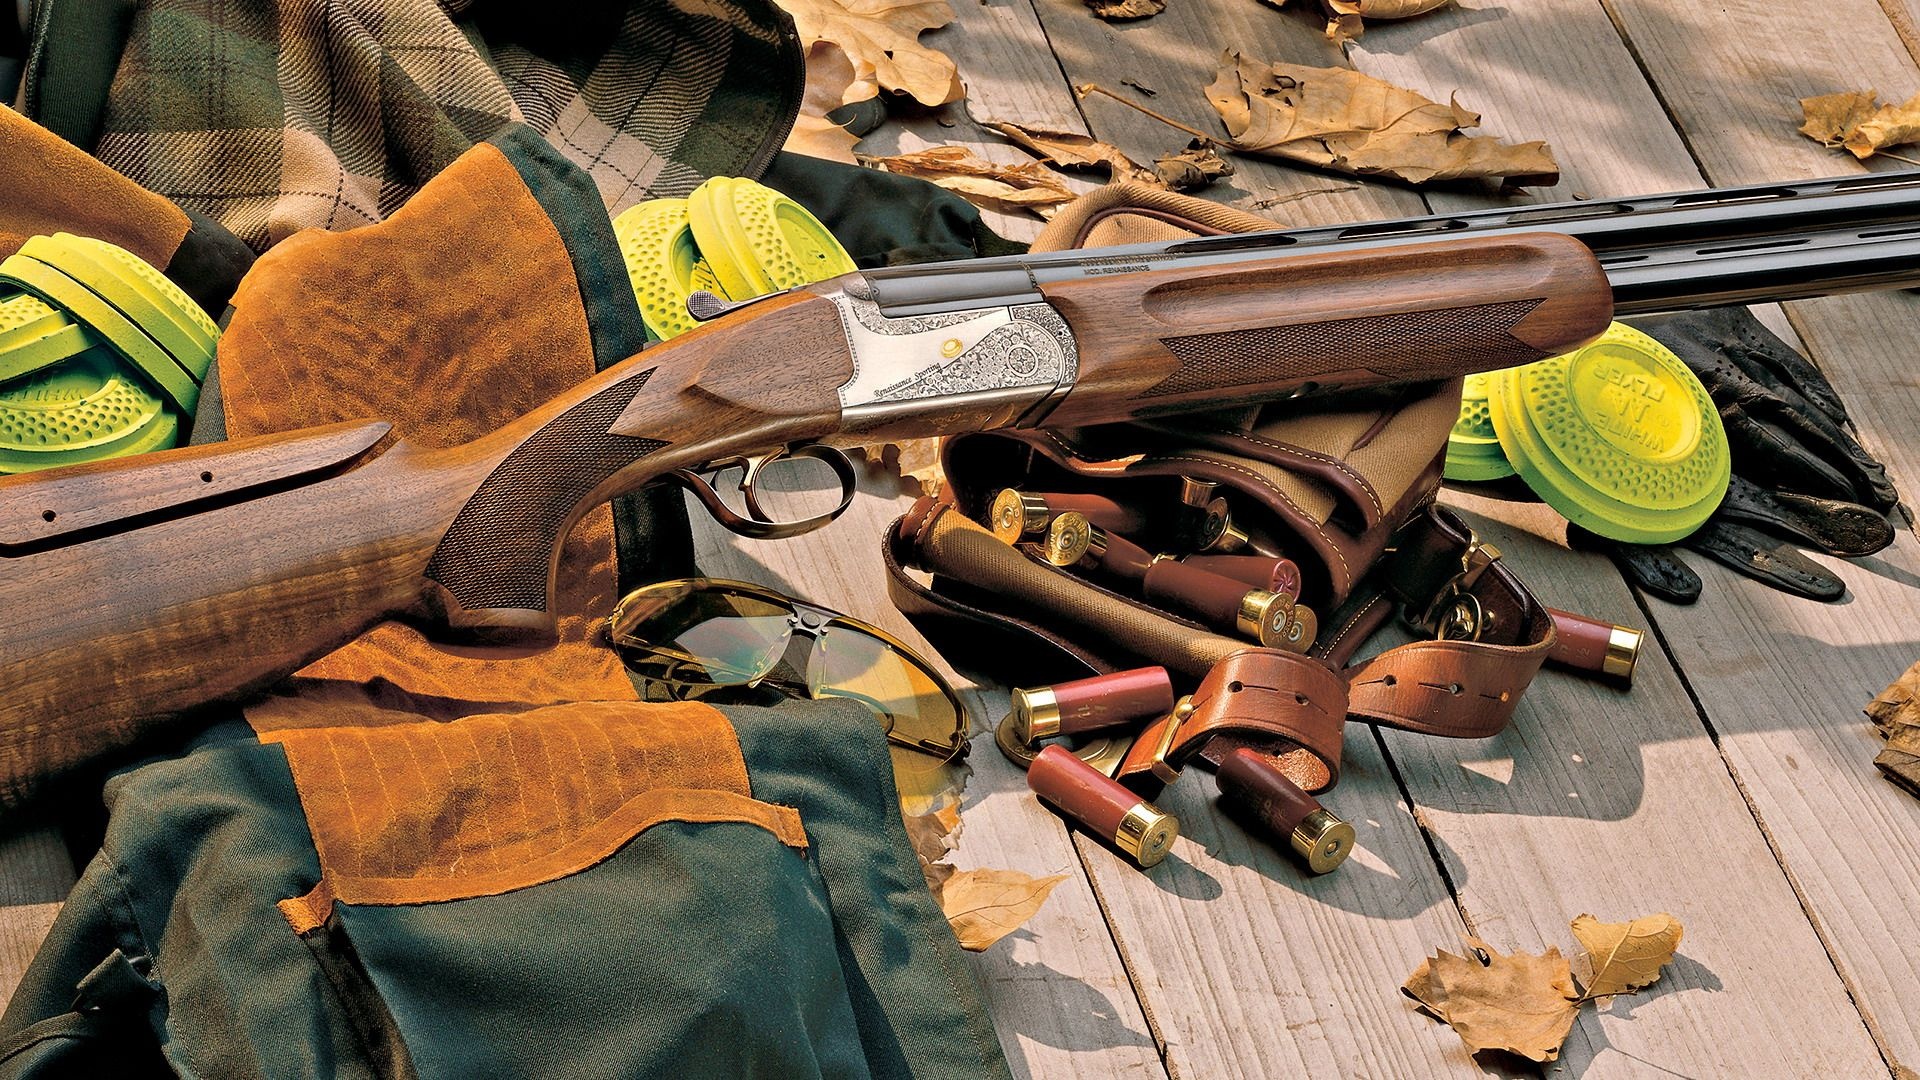 Skeet Shooting: A break-action over-and-under double-barreled shotgun, 12 gauge, Recreational sport. 1920x1080 Full HD Wallpaper.